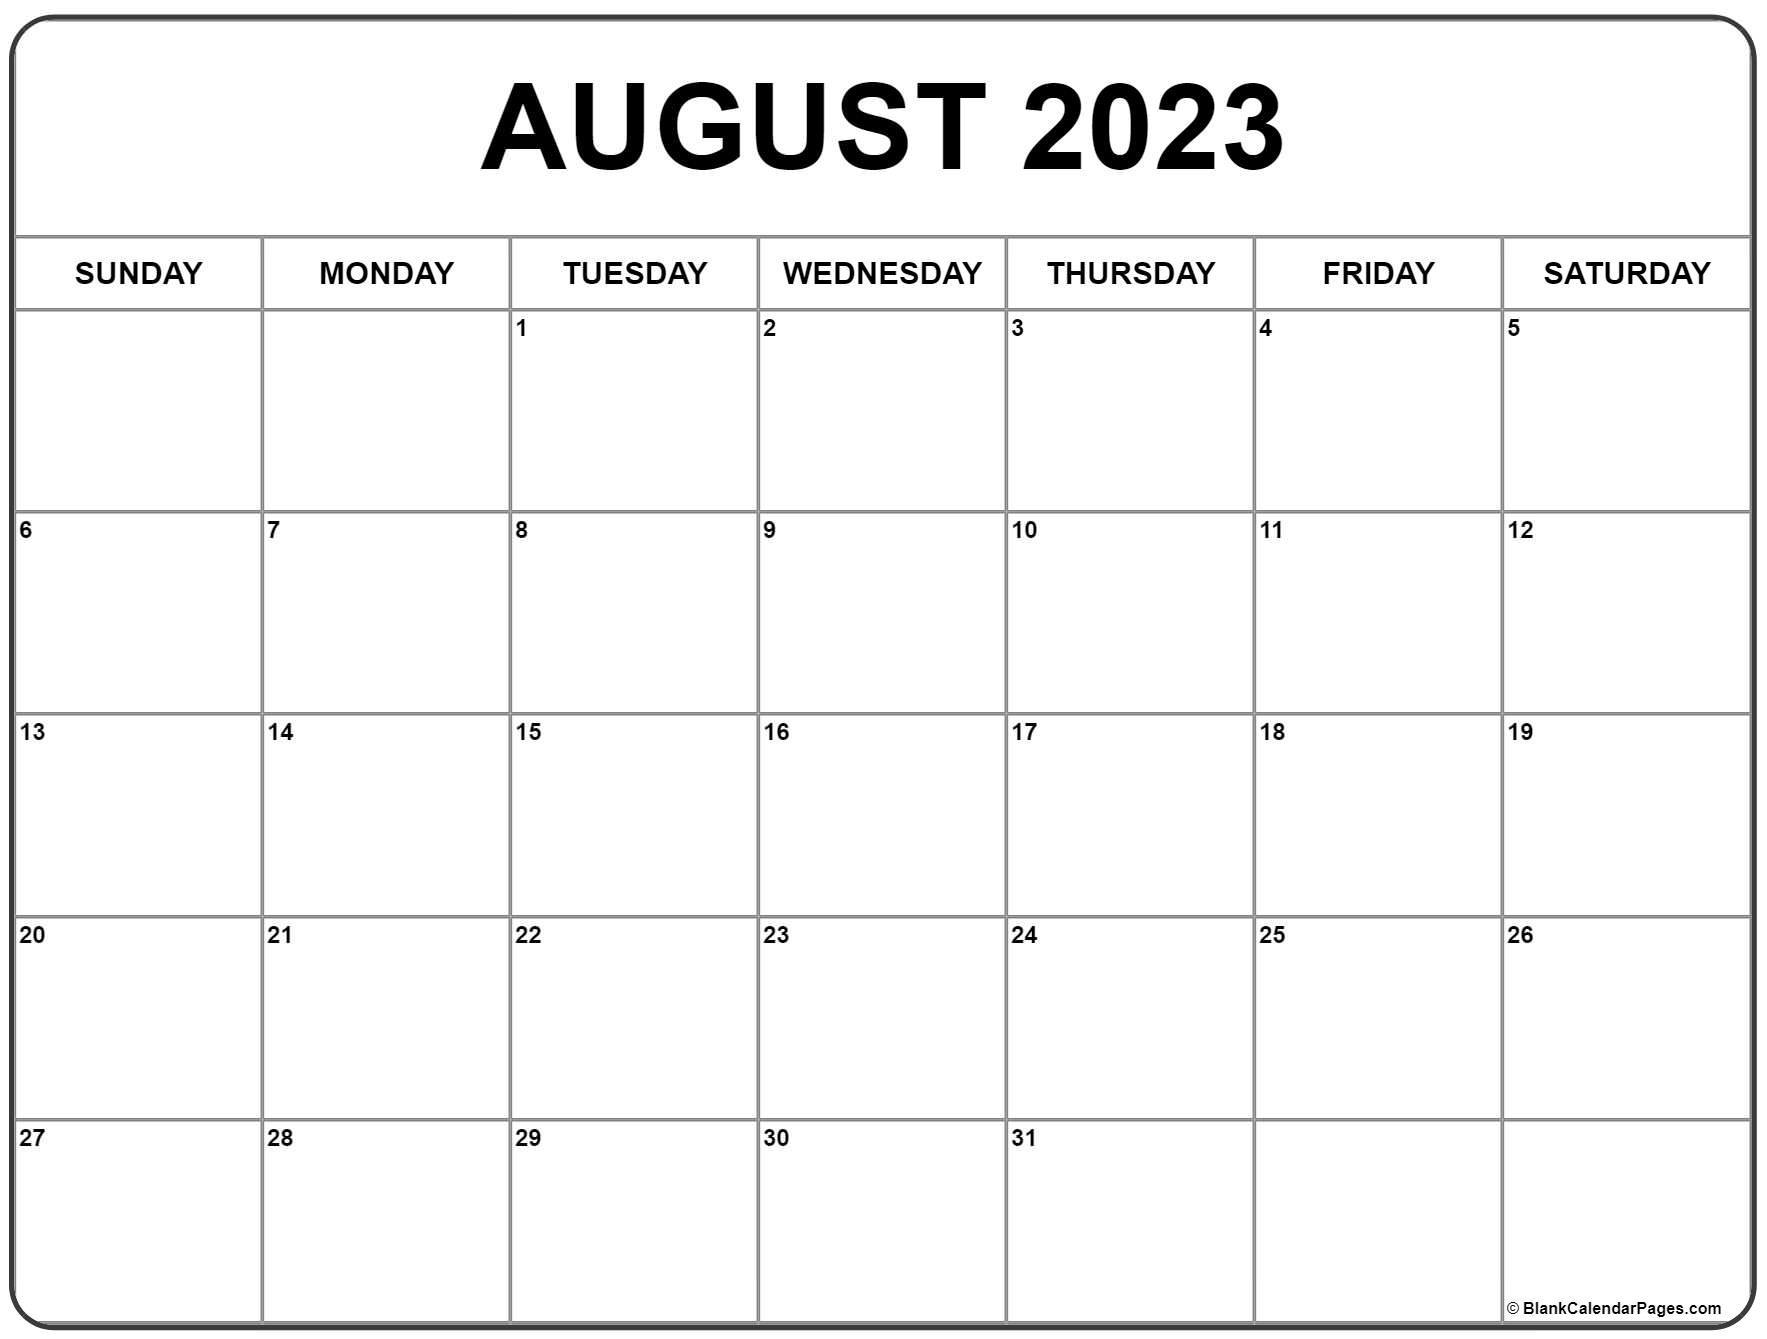 august-2023-calendar-free-printable-calendar-august-2023-calendar-free-printable-calendar